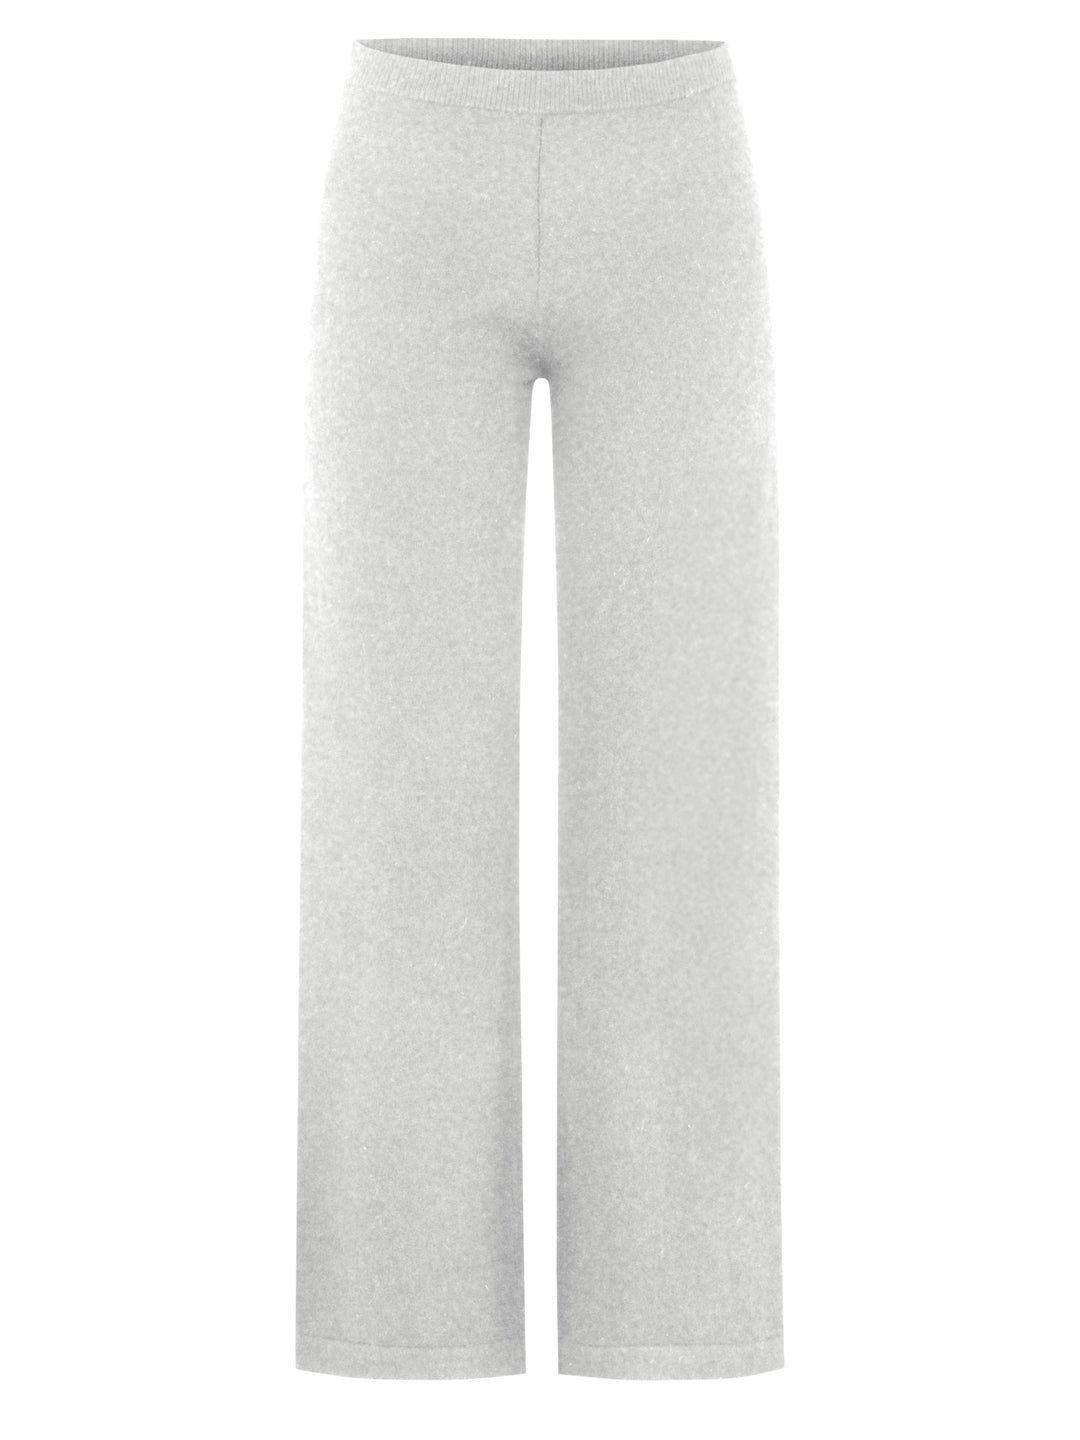 Kashmina "Classic" pants in 100% pure cashmere. Color: light grey. Scandinavian design by Kashmina. 